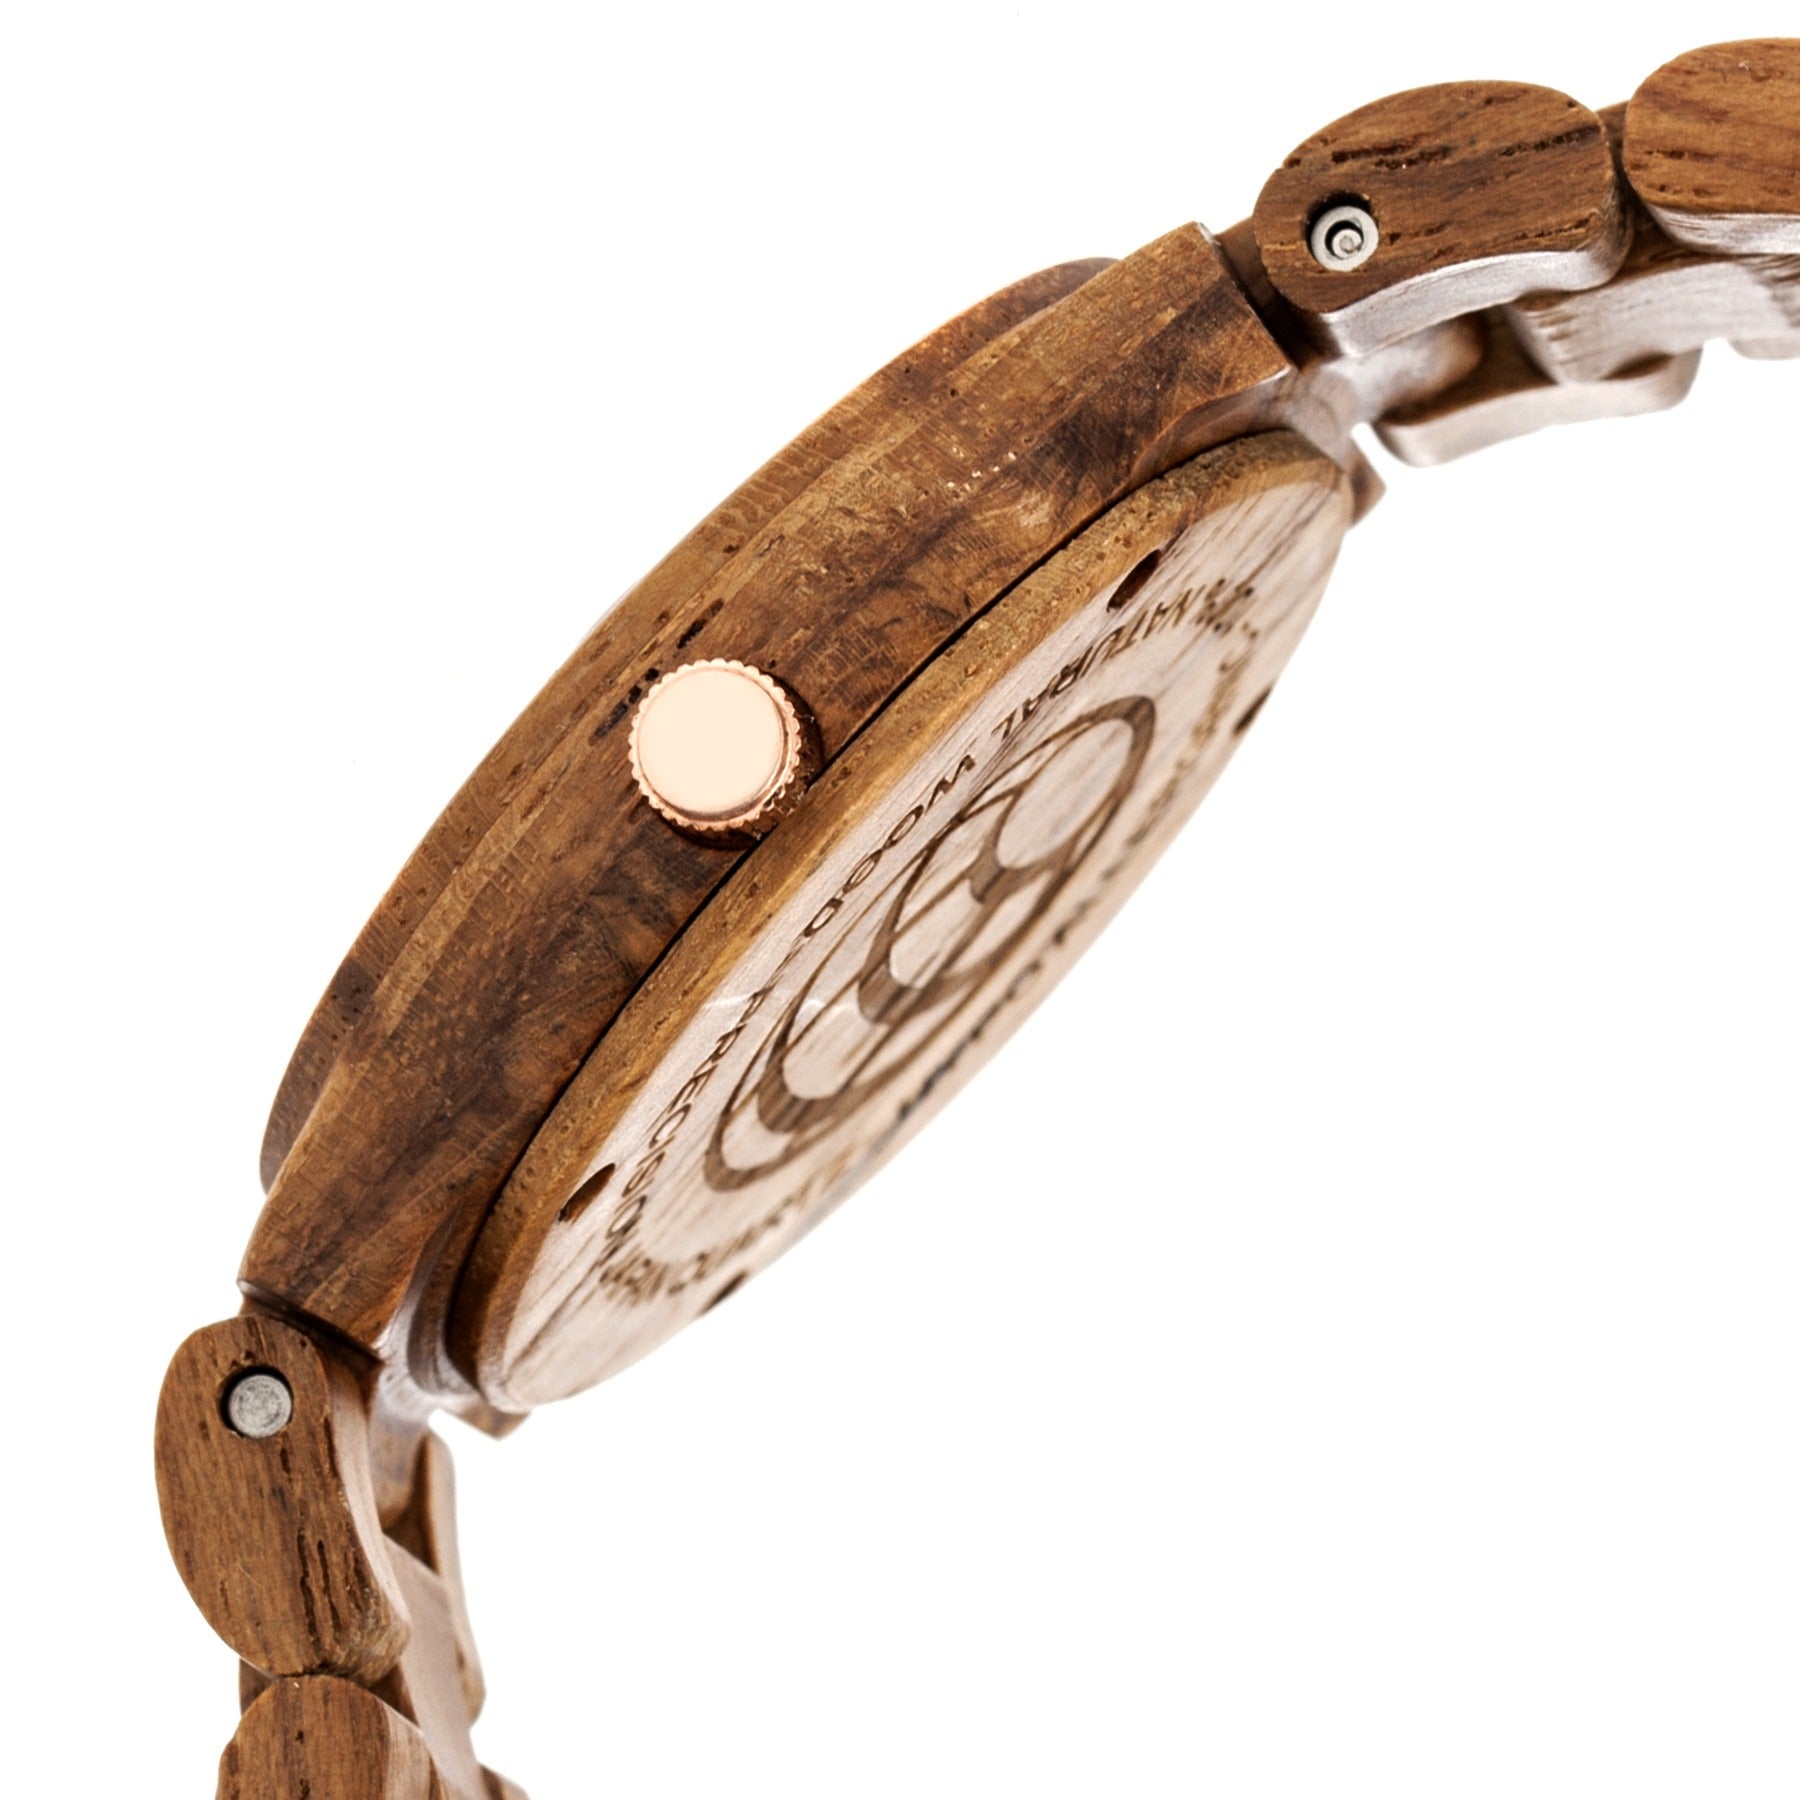 Earth Wood Biscayne Bracelet Watch w/Date - Brown - ETHEW4205